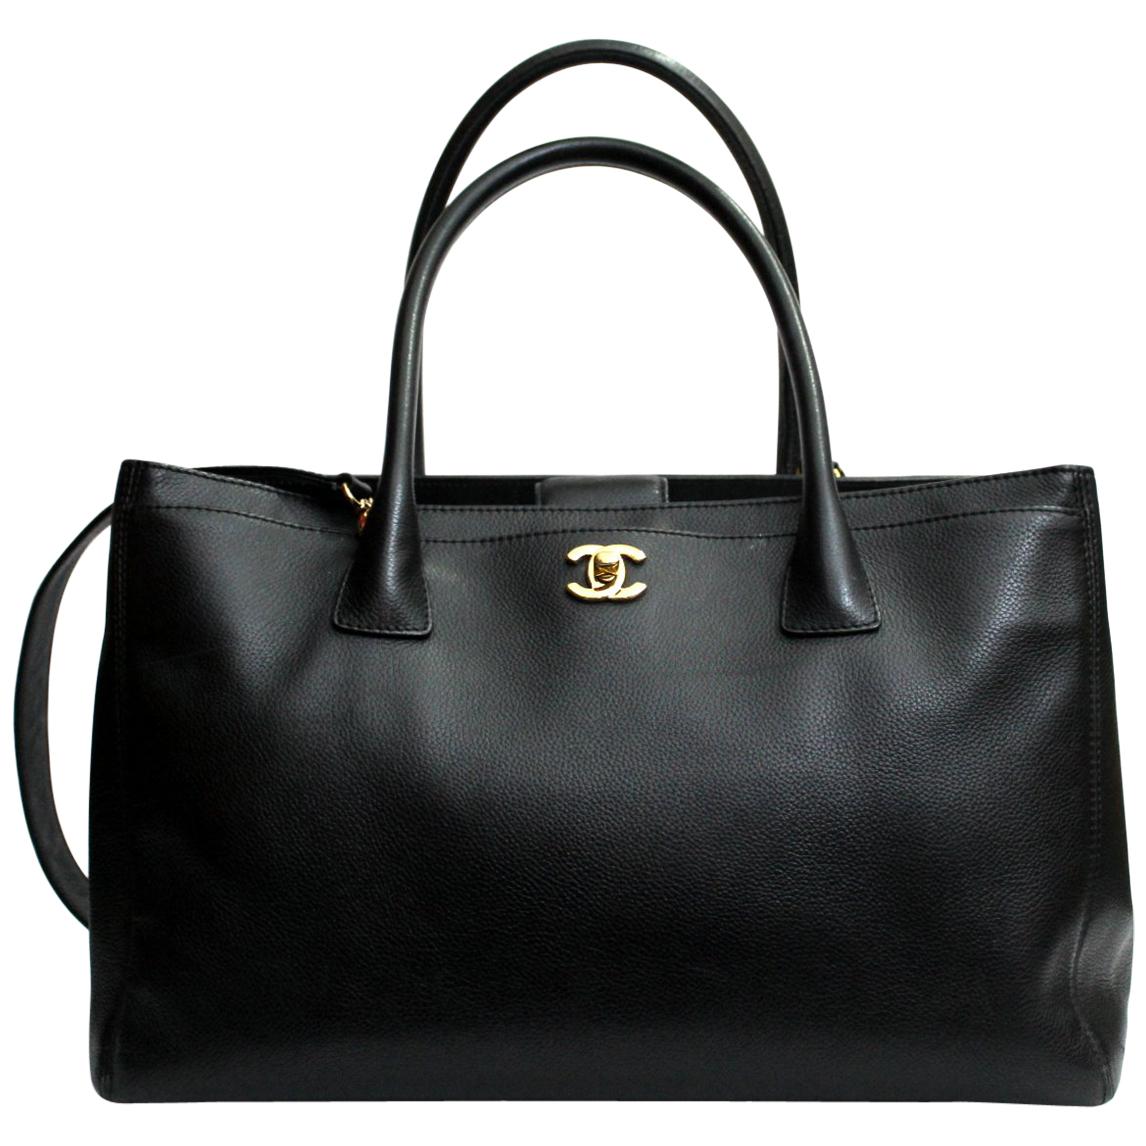 2013/2014 Chanel Black Leather Executive Bag